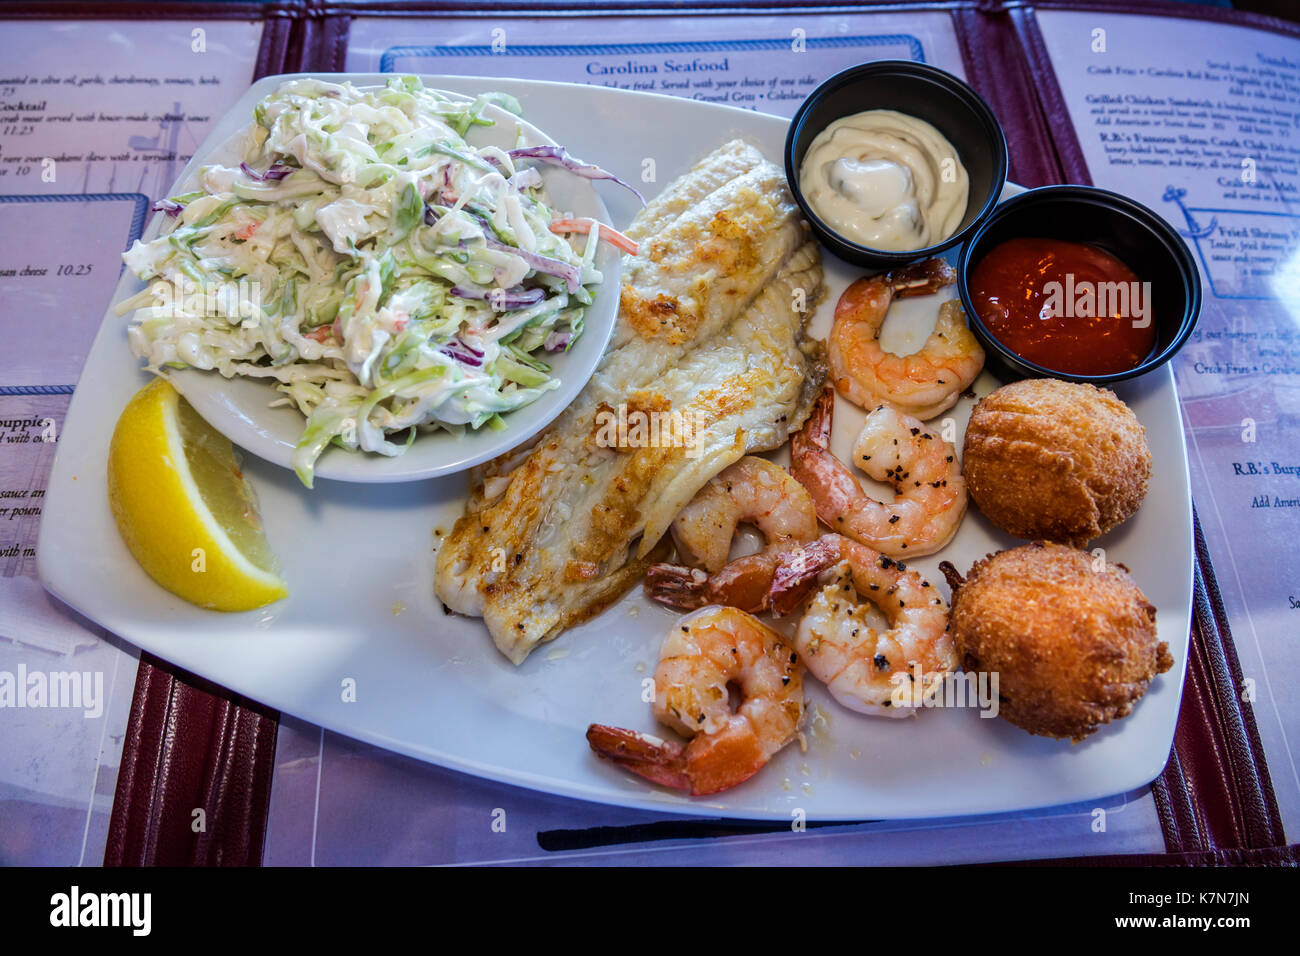 South Carolina,Mt. Pleasant,Shem Creek,waterfront,R.B.'s Seafood restaurant,dining,plate,shrimp,fish filet,hush puppies,coleslaw,SC170516040 Stock Photo